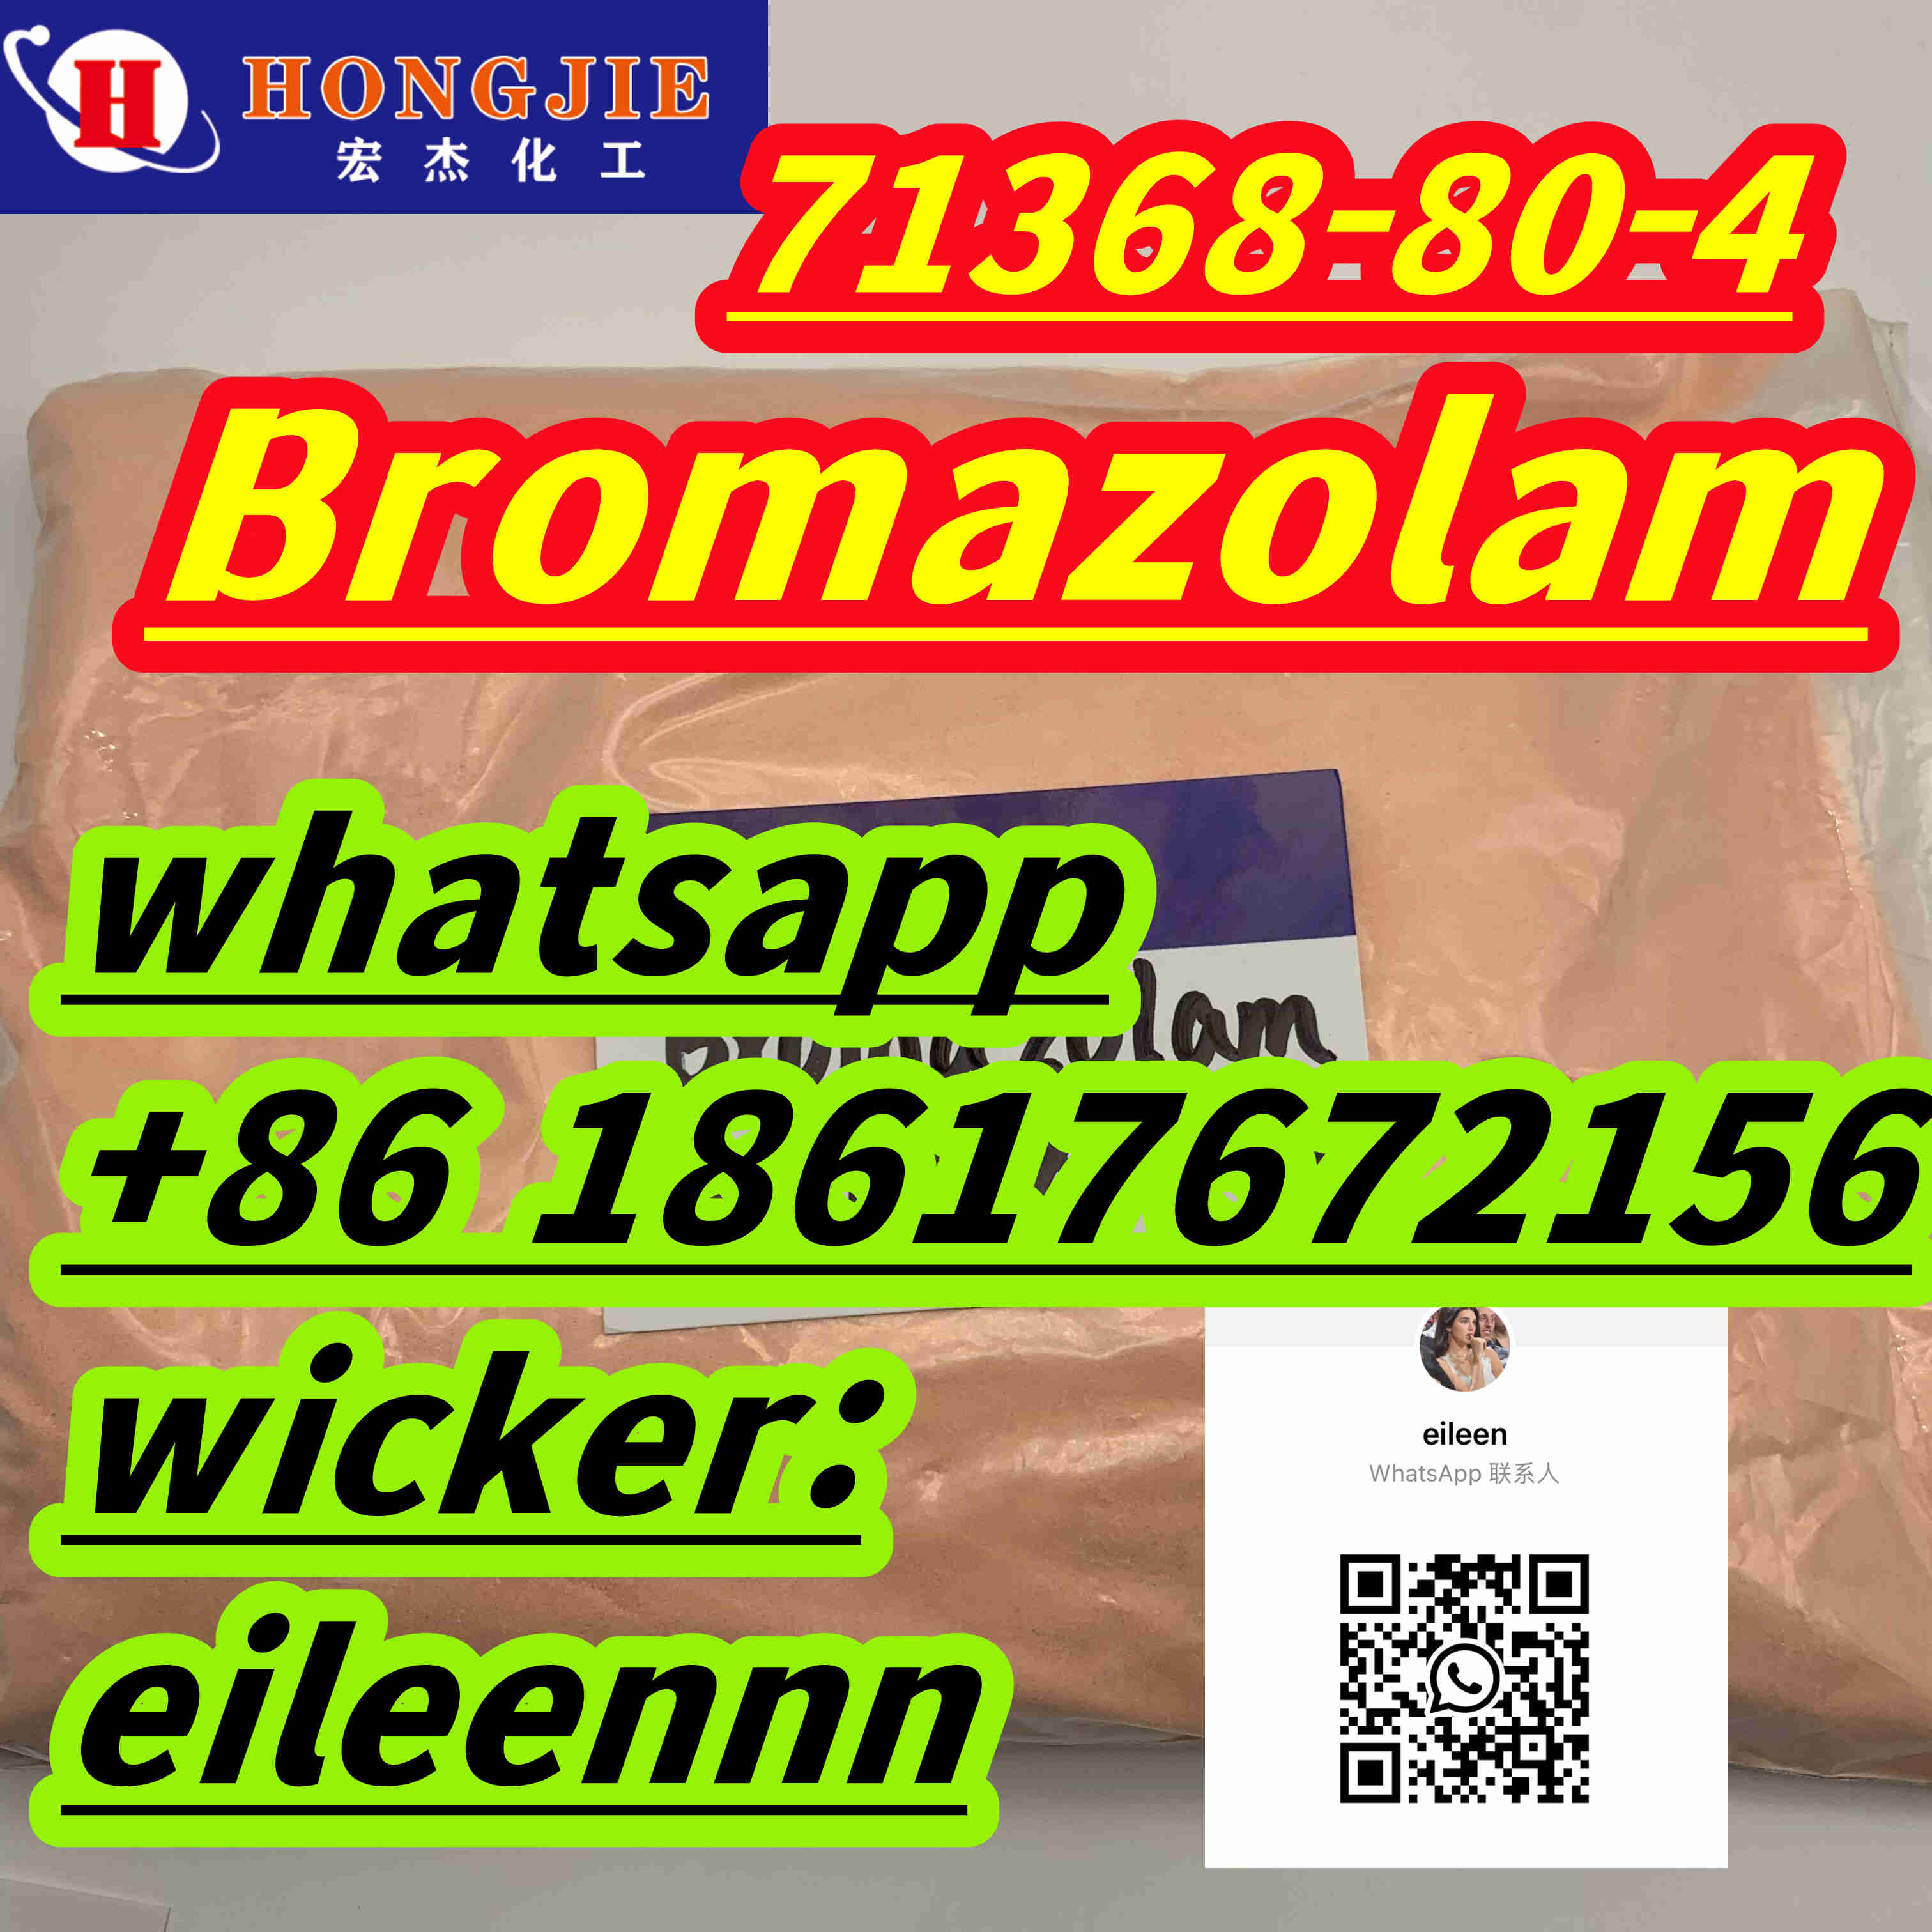 Whatsapp:+8618617672156 wicker:eileennn bromazolam low price - photo